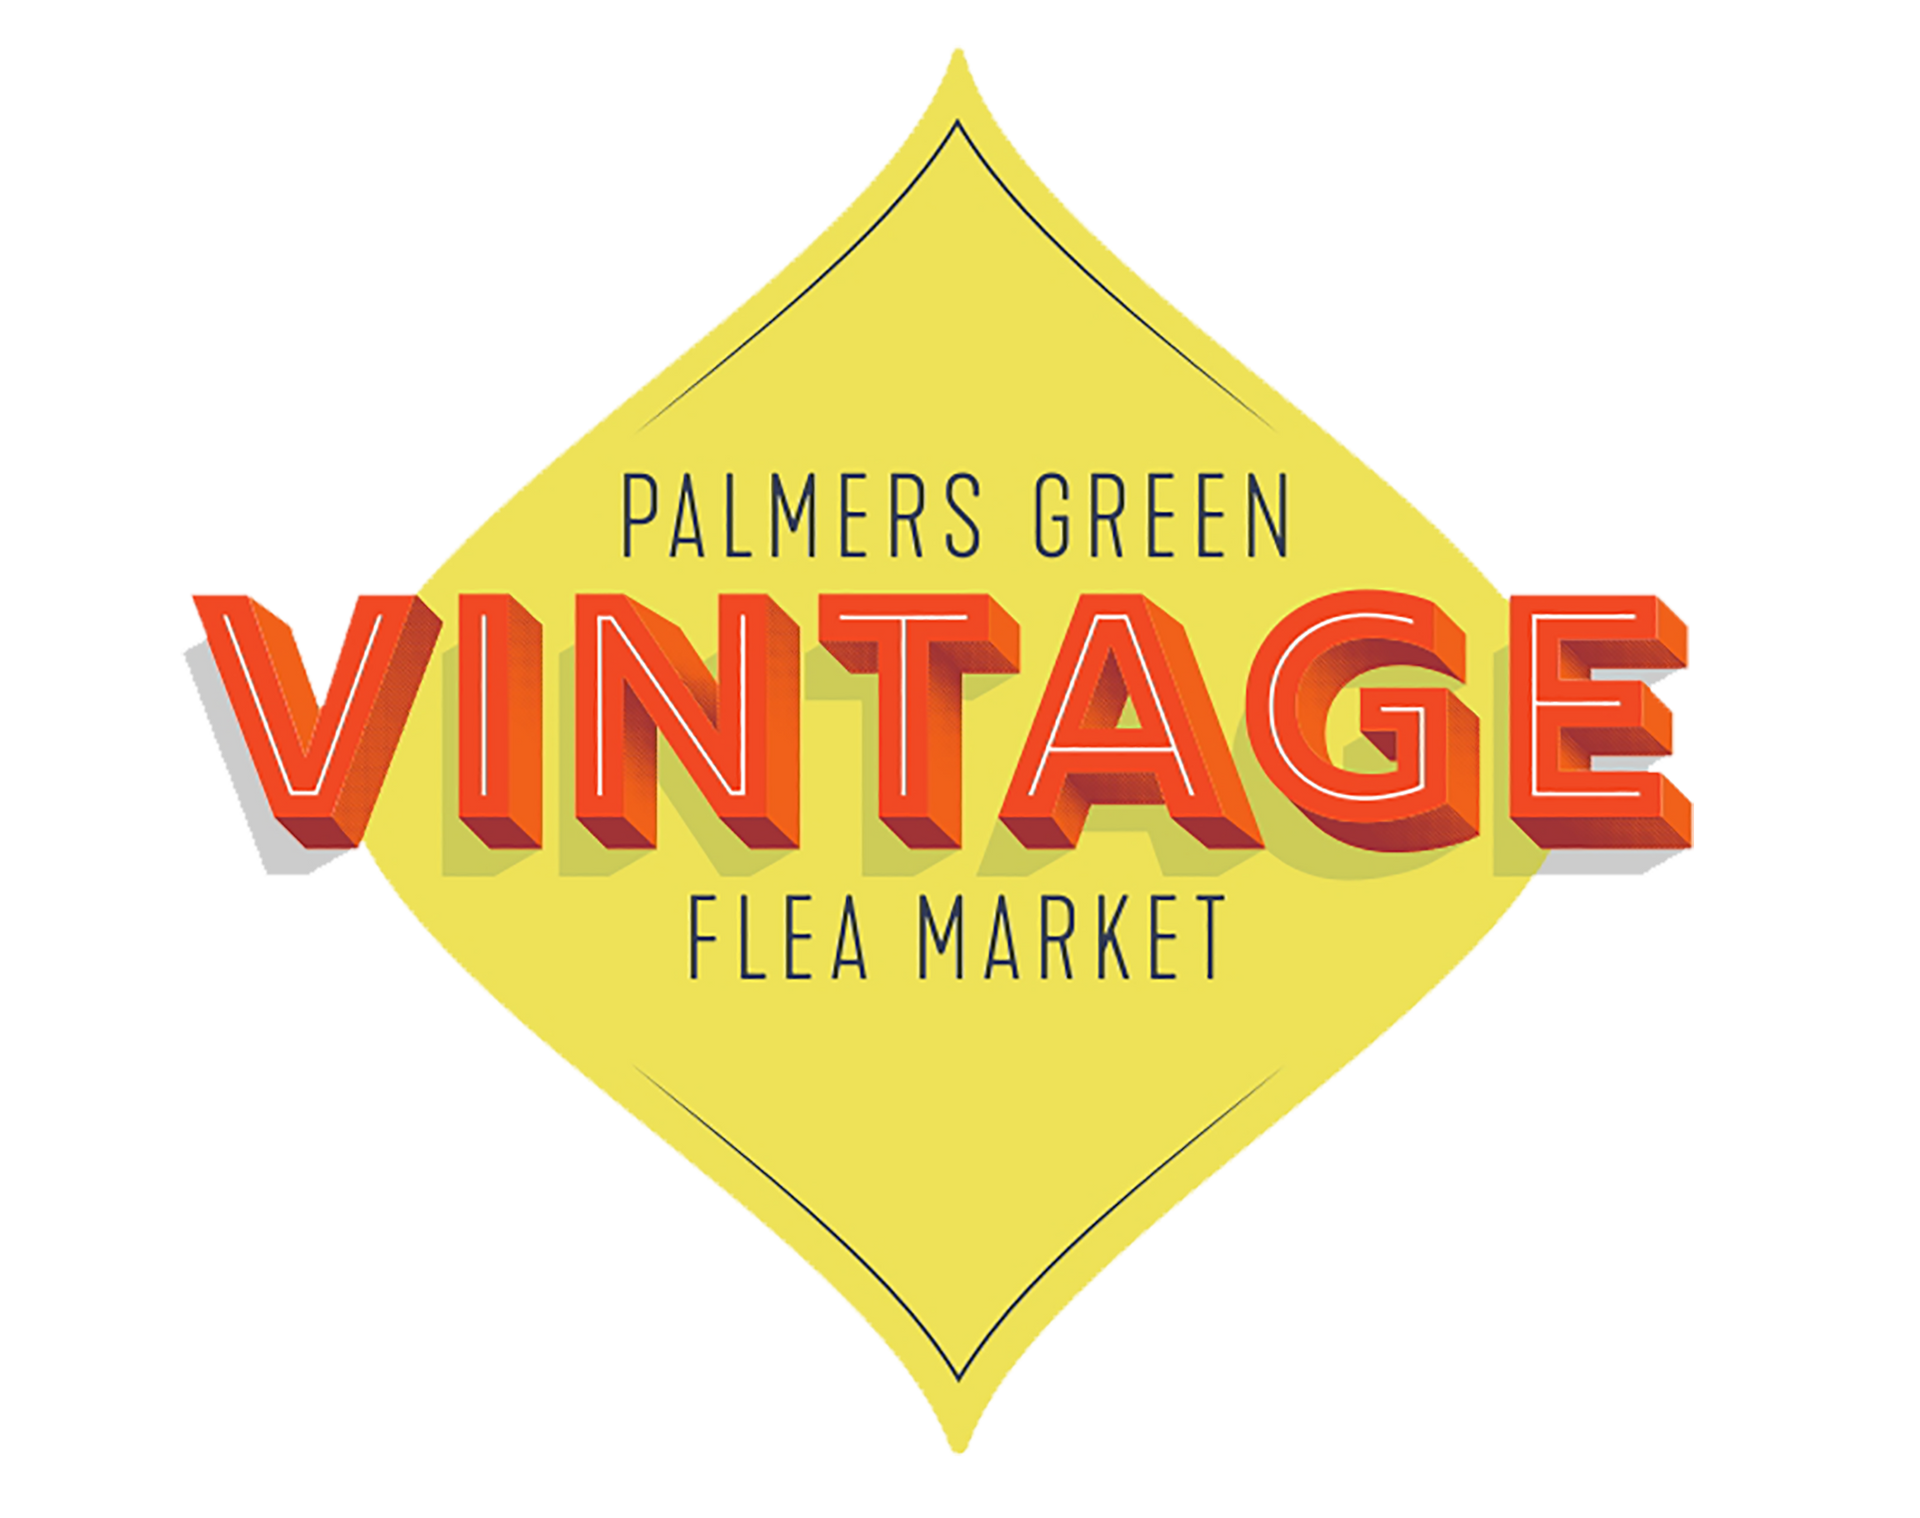 The logo for palmers green vintage flea market